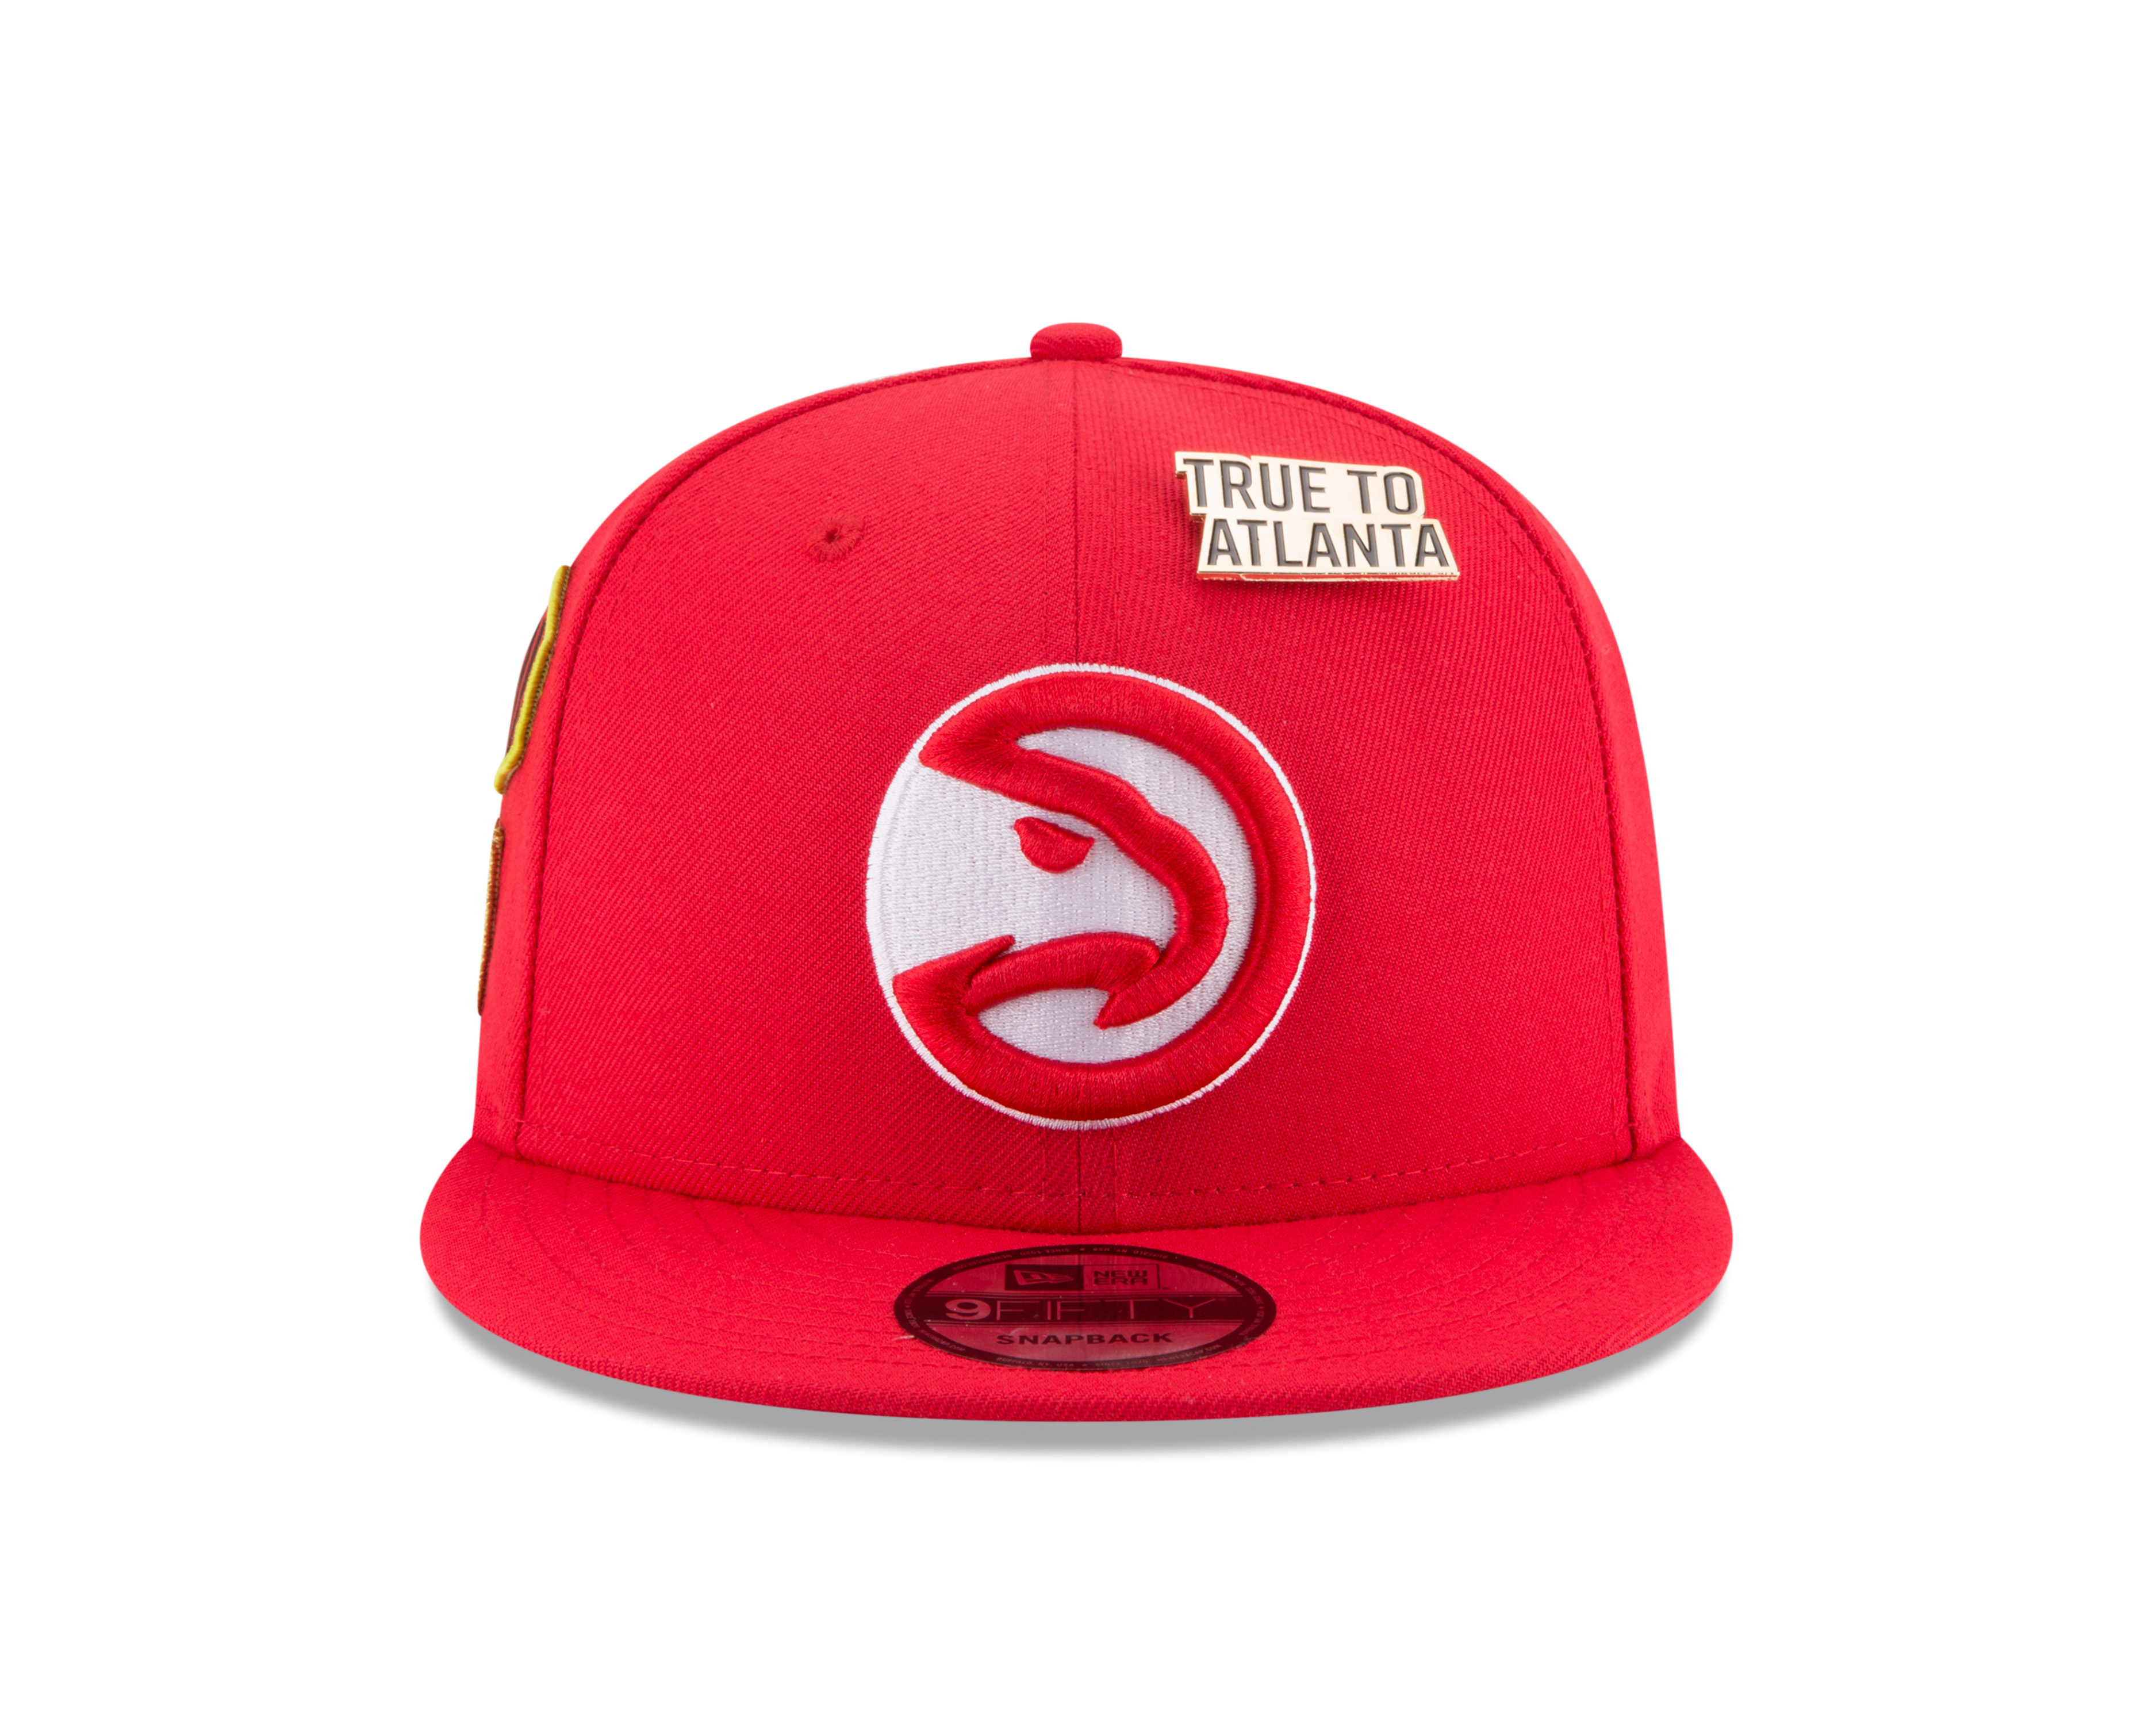 NBA draft hats: Caps revealed for 2018 NBA draft